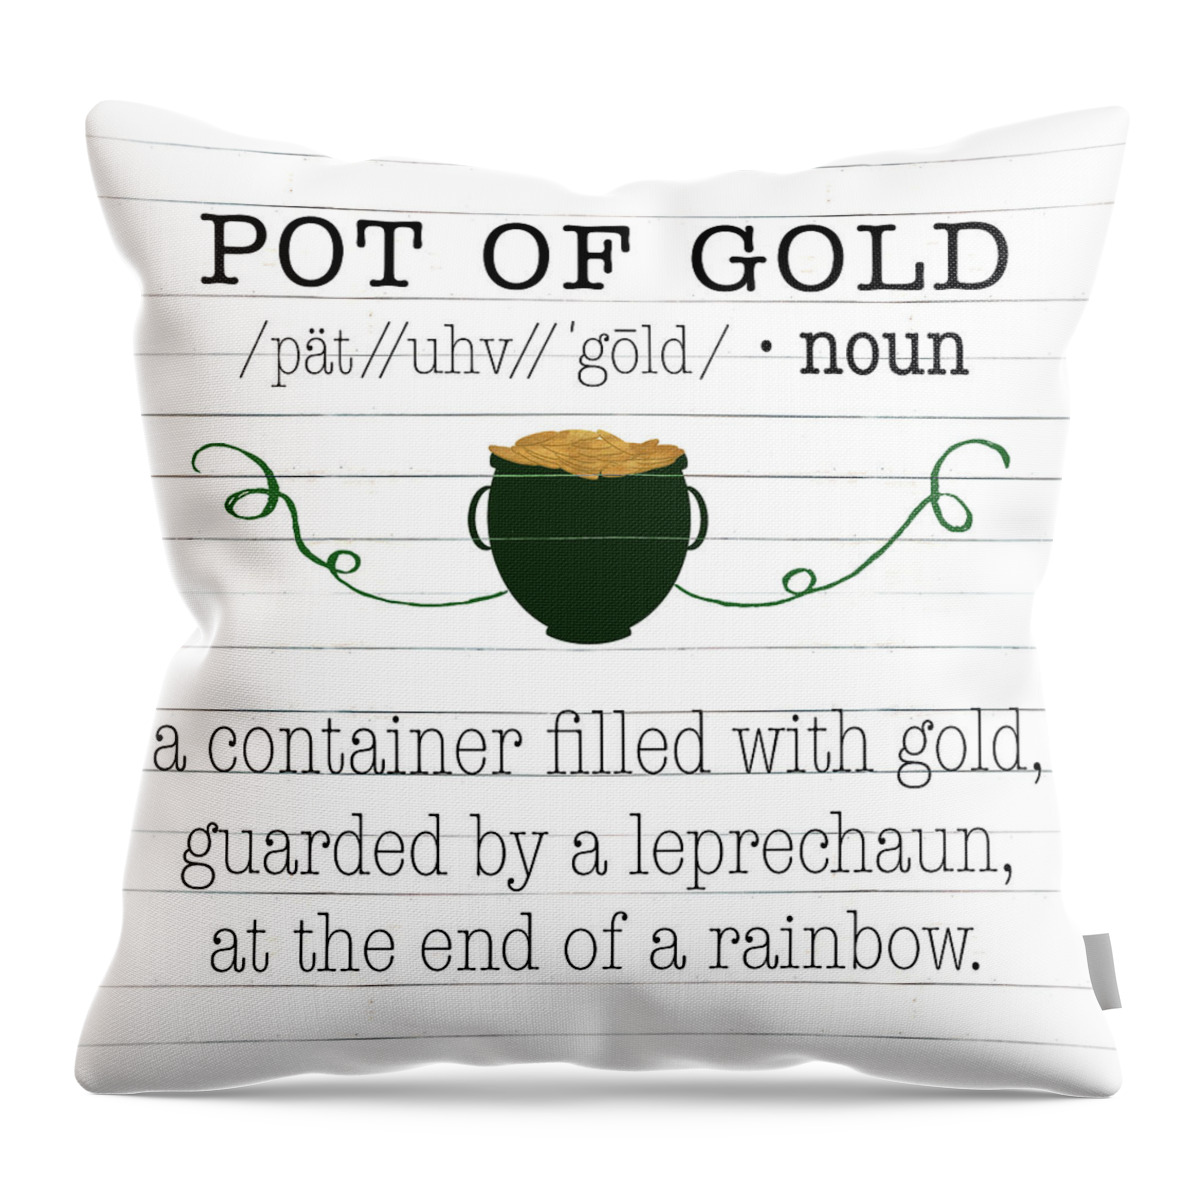 Irish Throw Pillow featuring the digital art Pot Of Gold by Sd Graphics Studio